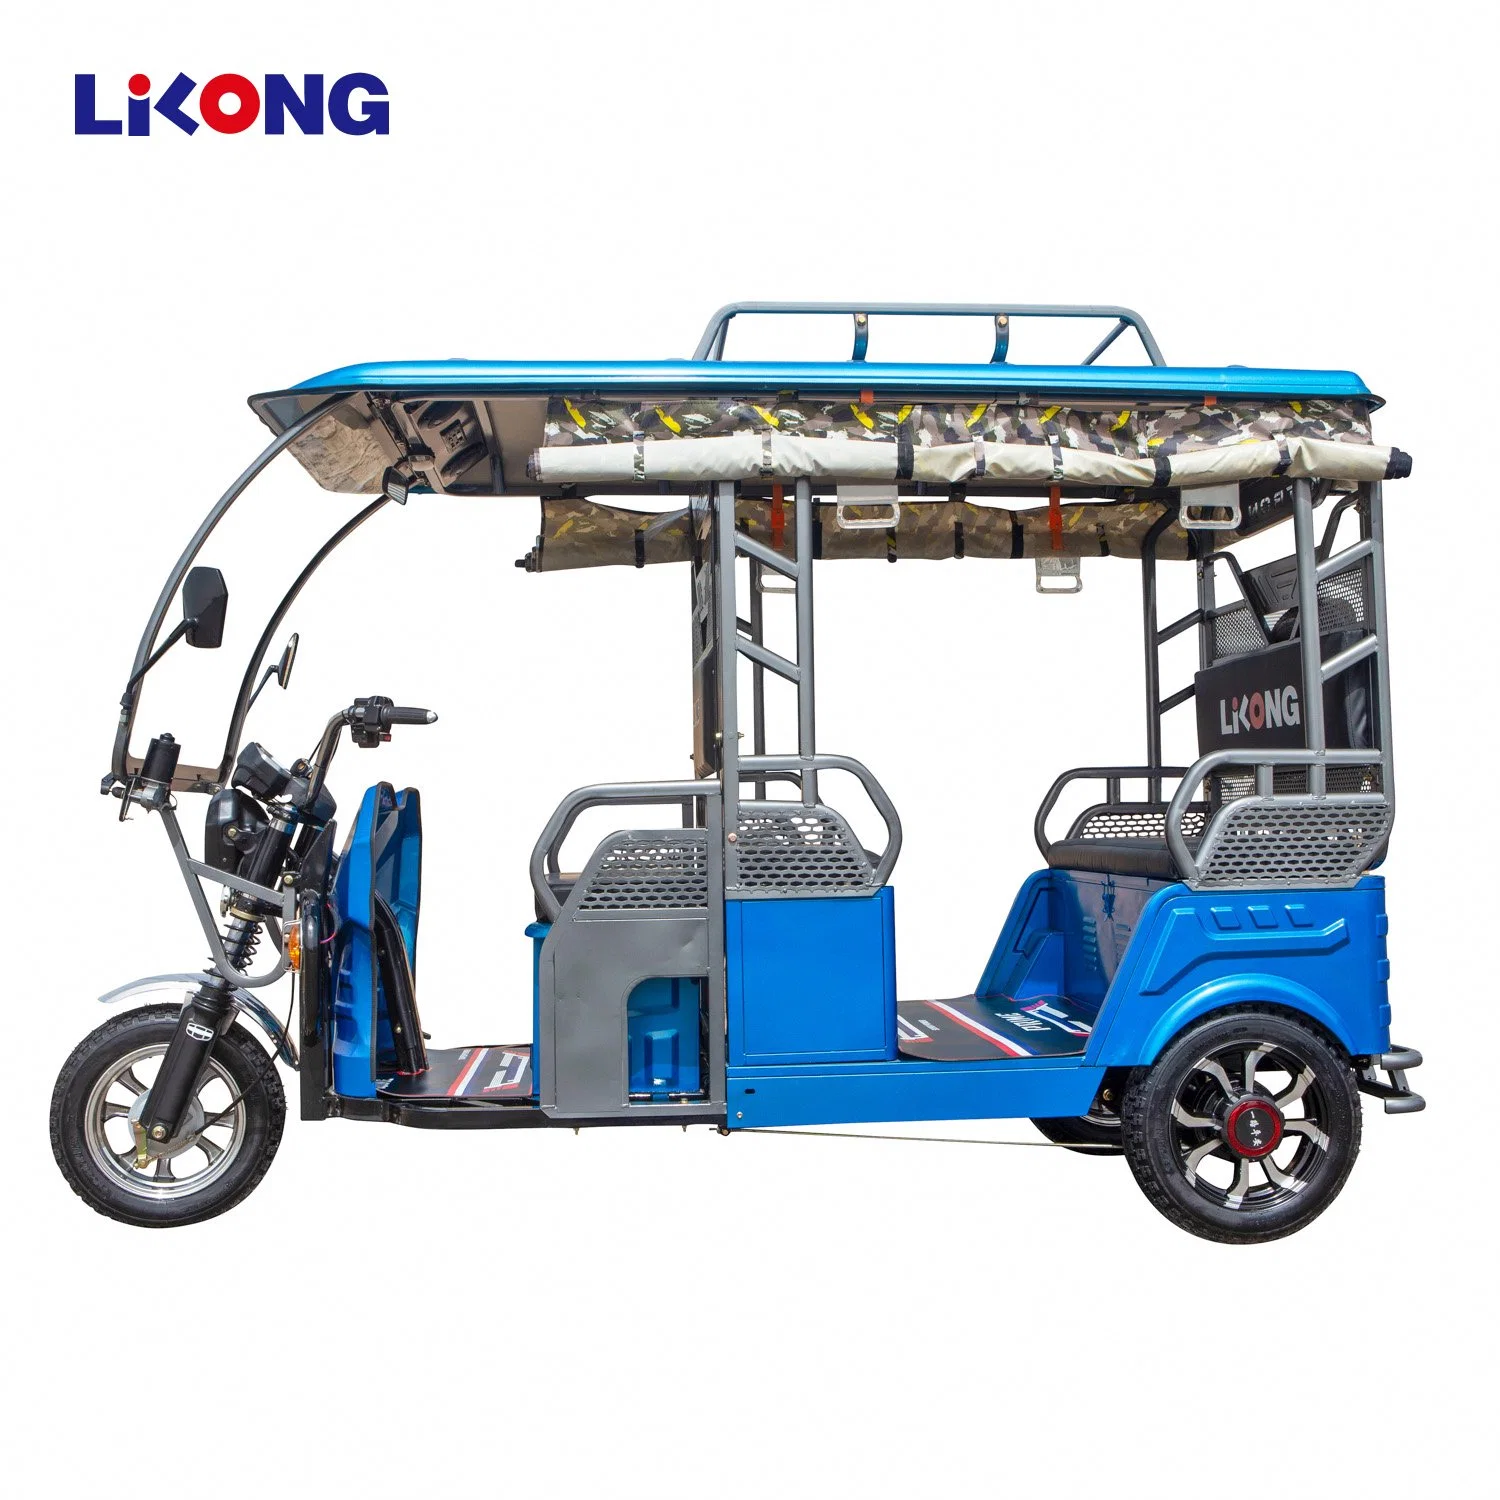 Lilong Hot Sale Indian Passenger Electric Auto Rickshaw Three Wheel Motorcycle Taxi